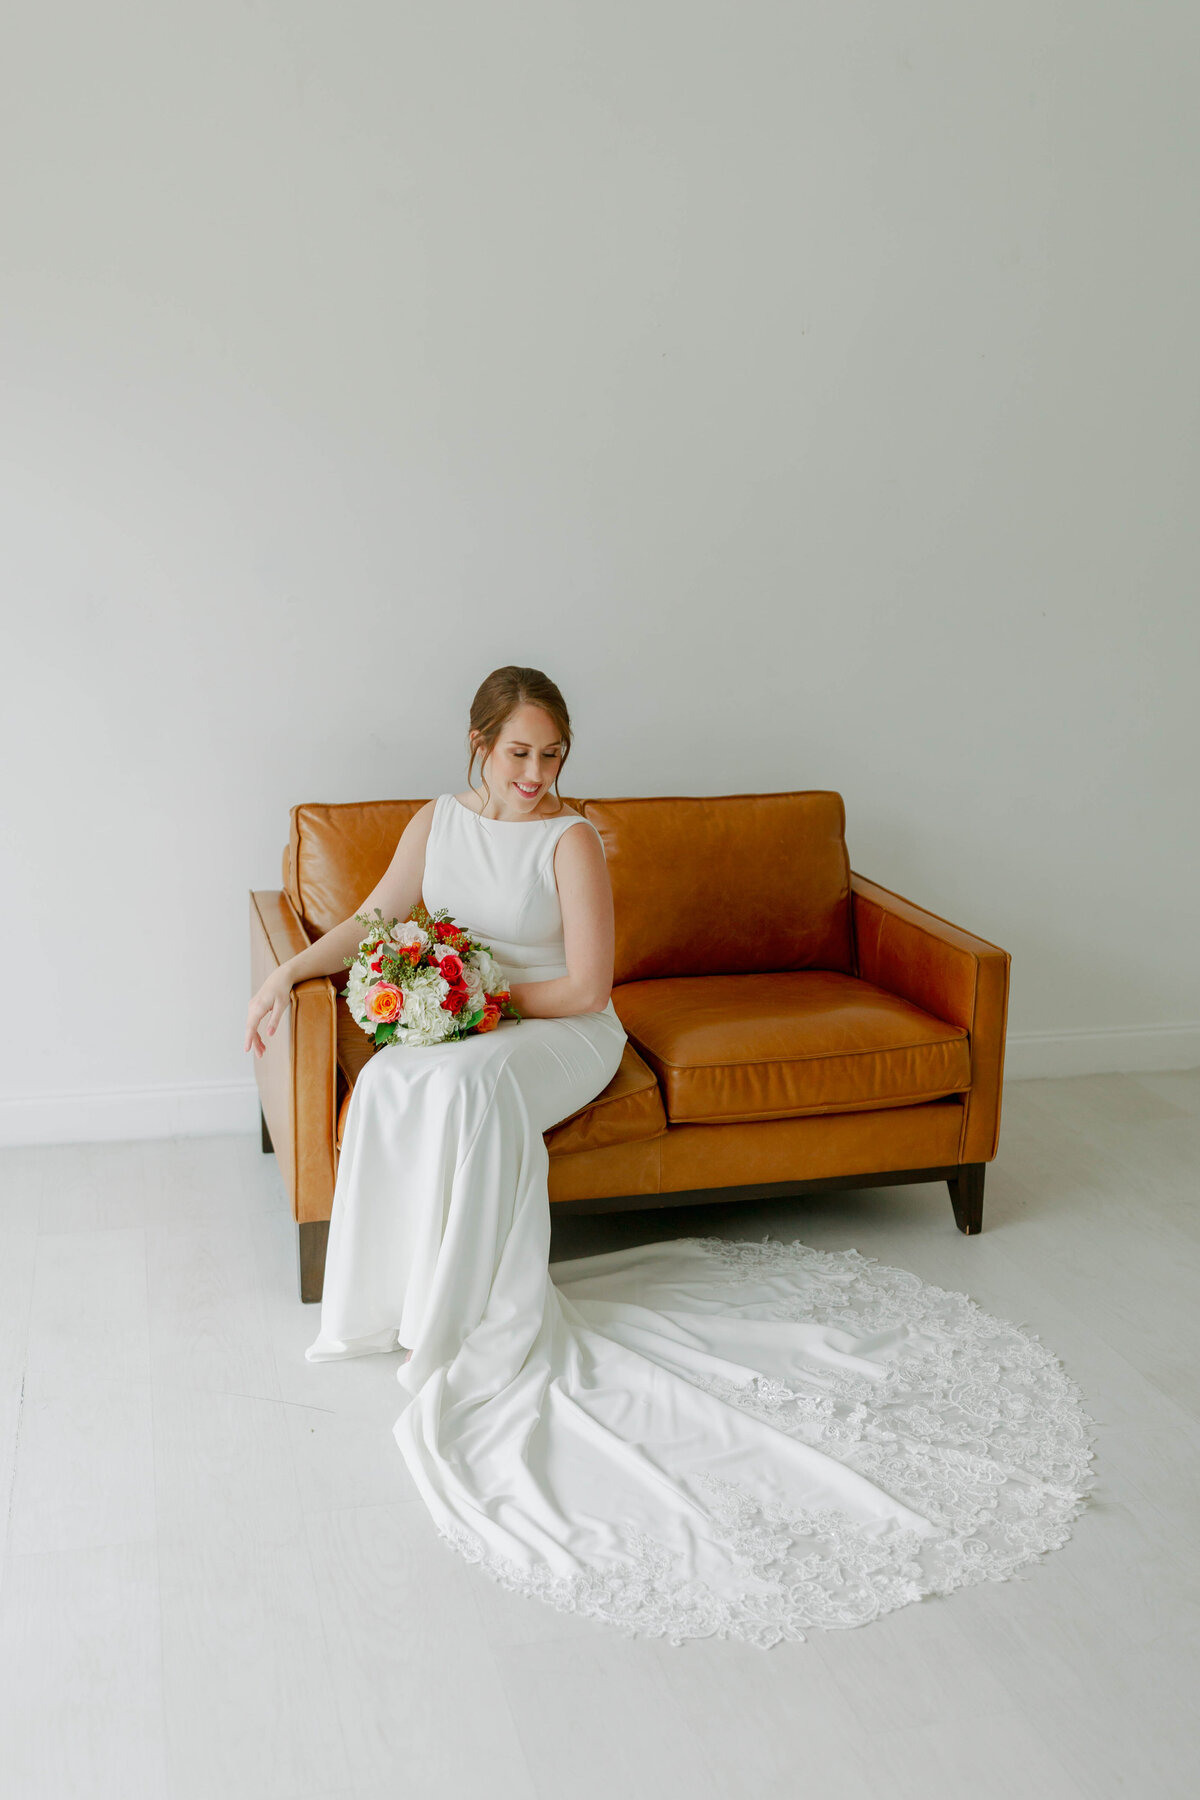 Lumen Room luxury bridal photoshoot